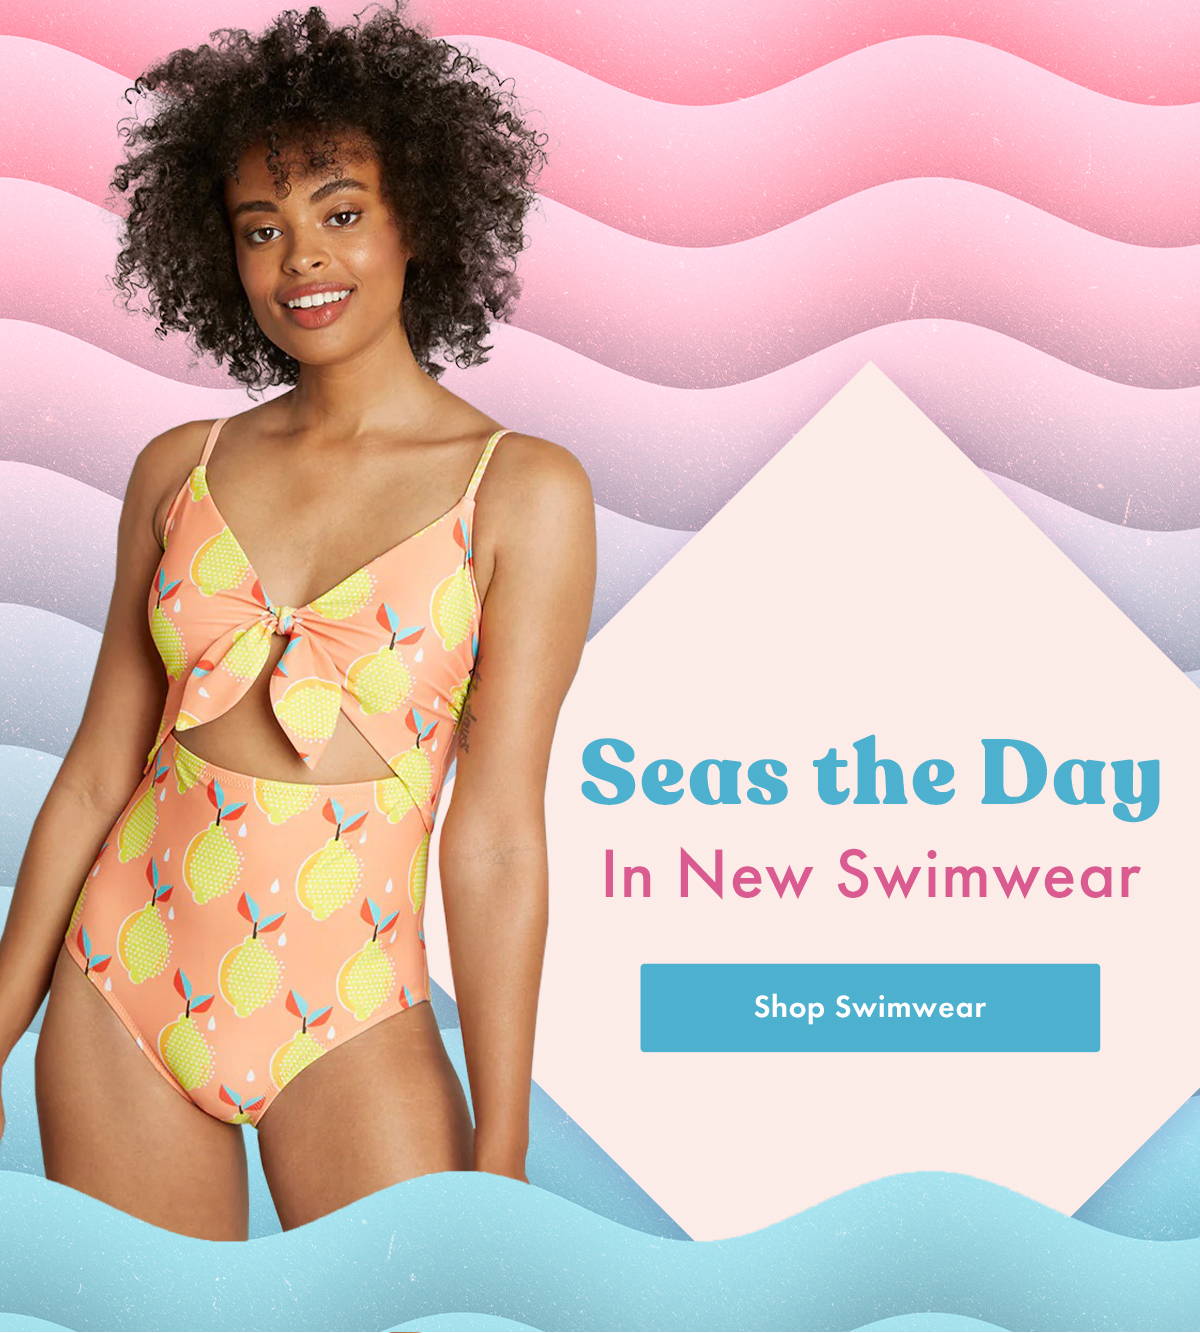 Seas the Day in New Swimwear